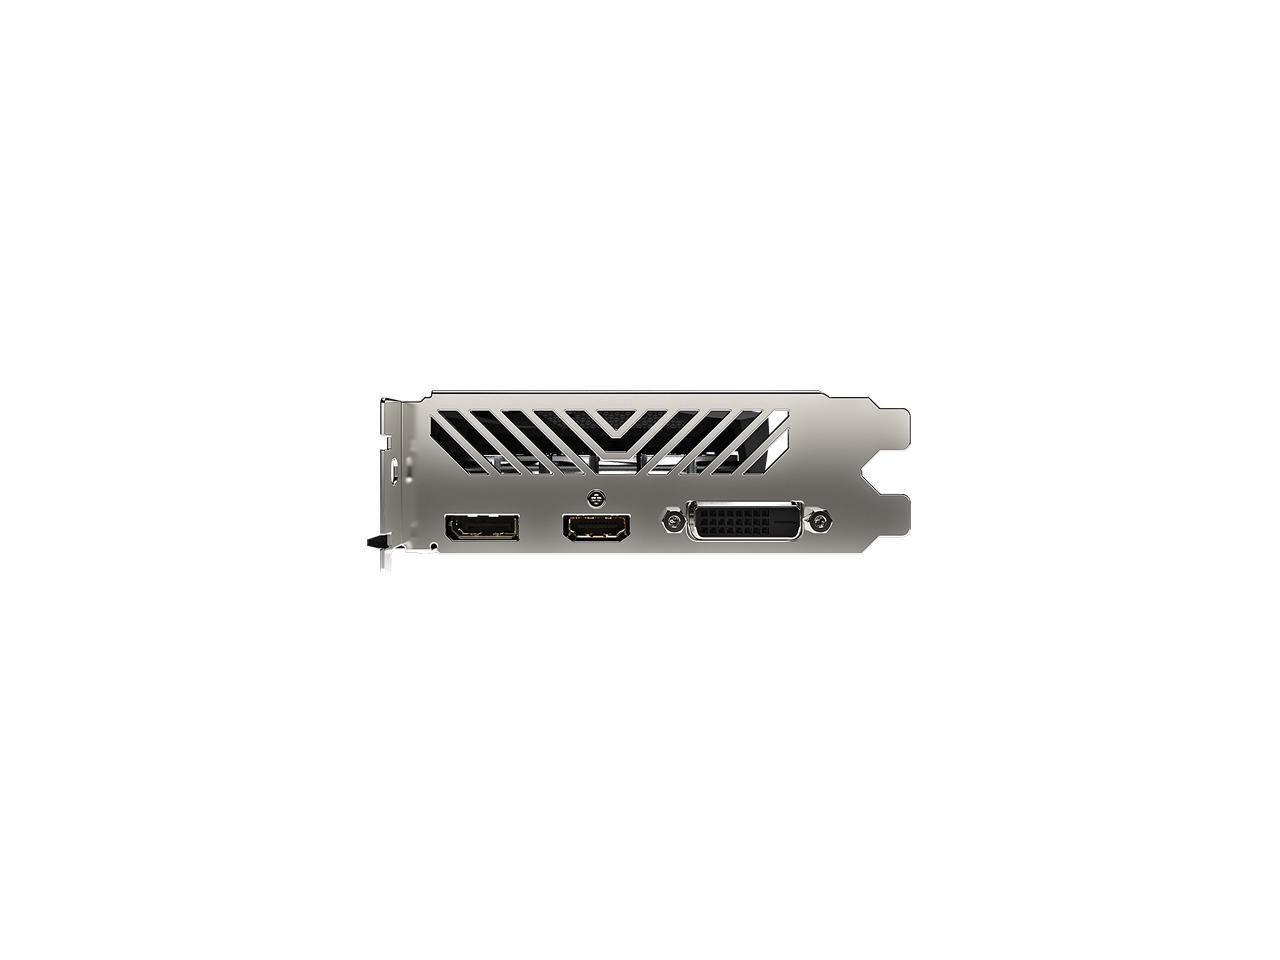 Gigabyte Geforce Gtx 1650 4Gb Gddr6 Pci Express 3.0 X16 Atx Video Card Gv-N1656Wf2Oc-4Gd (Rev. 2.0)